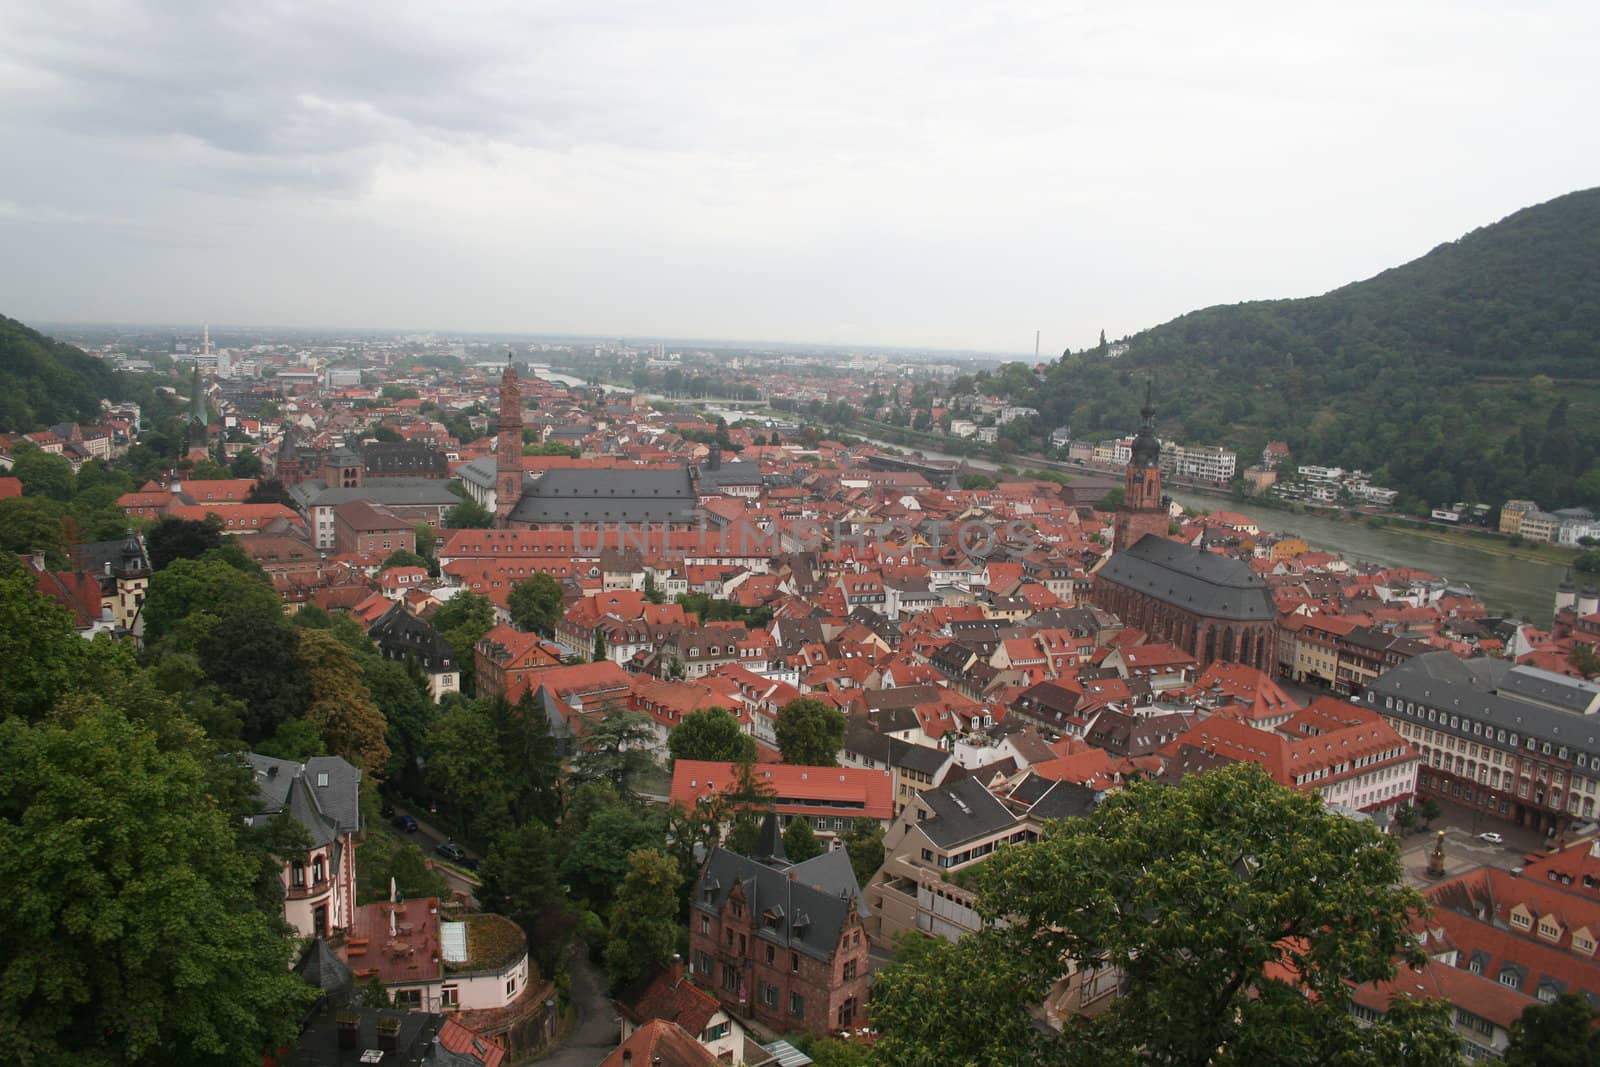 Red Heidelburg rooftops along the Rhine River as seen from Heidelburg castle